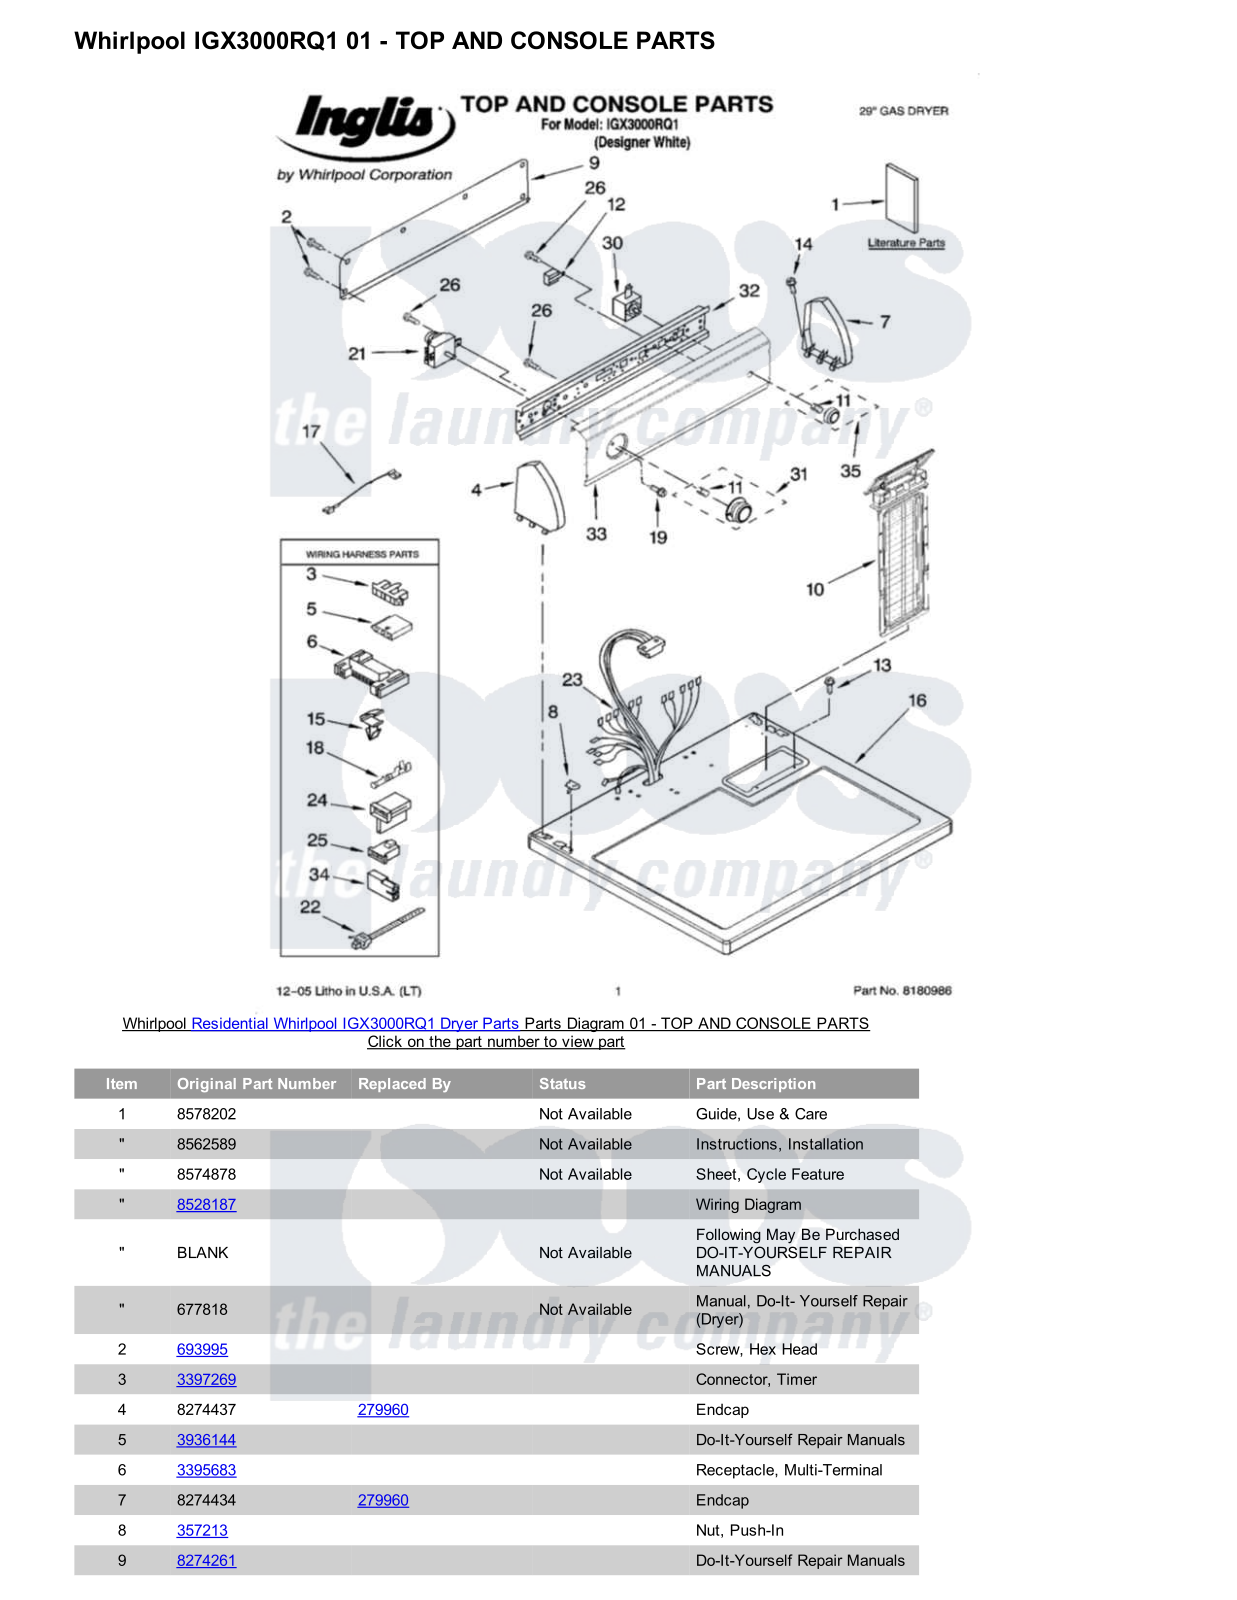 Whirlpool IGX3000RQ1 Parts Diagram